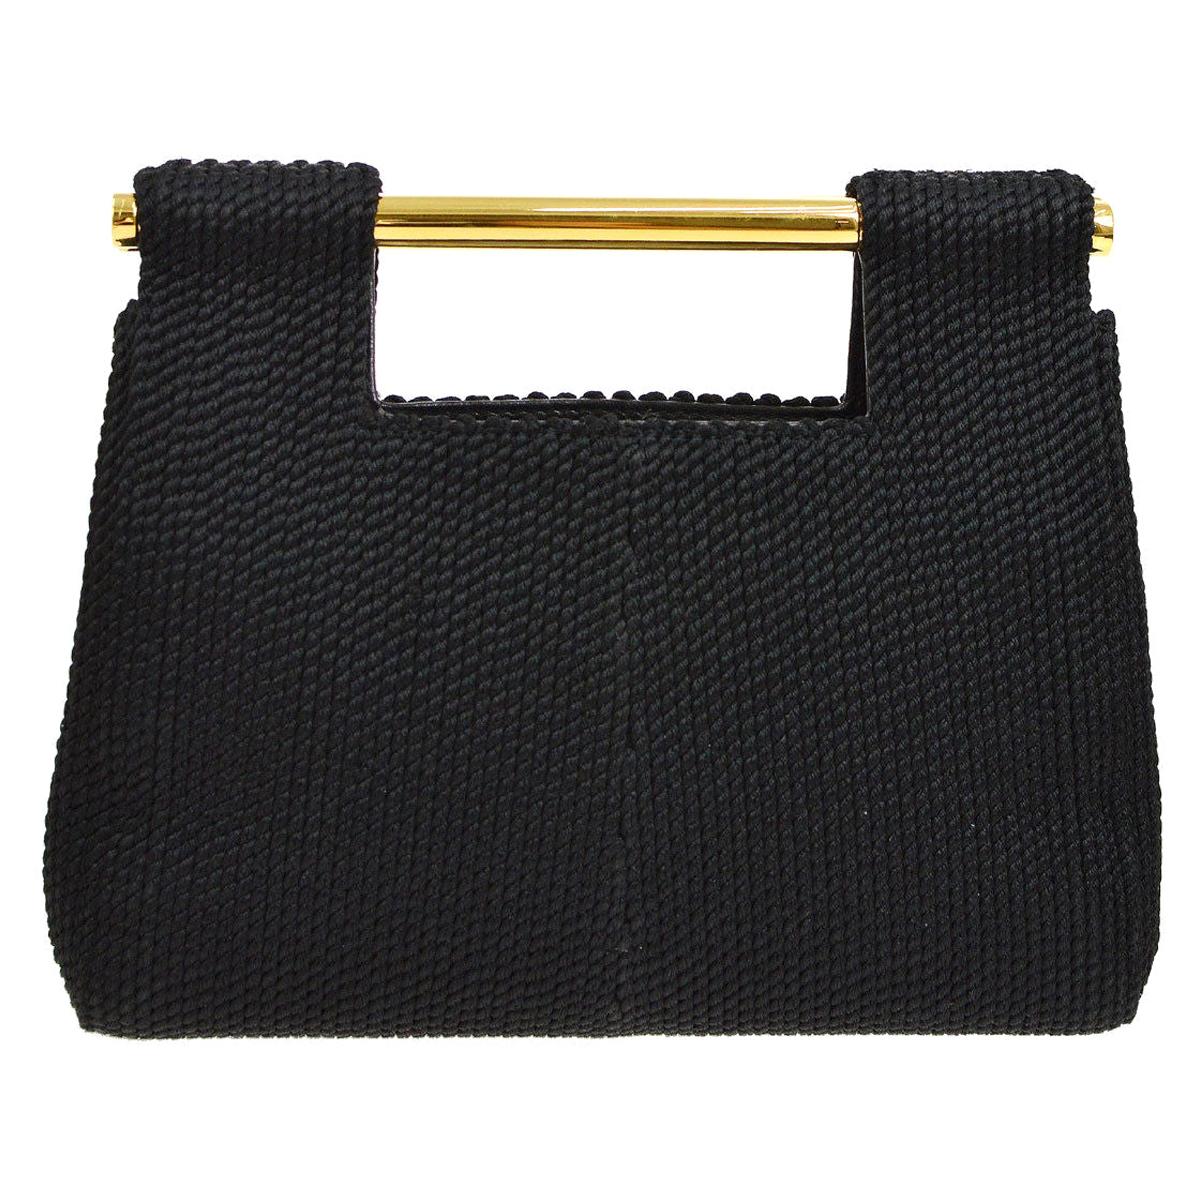 Chanel Black Silk Woven Braided Gold Bar Top Handle Satchel Clutch Bag in Box